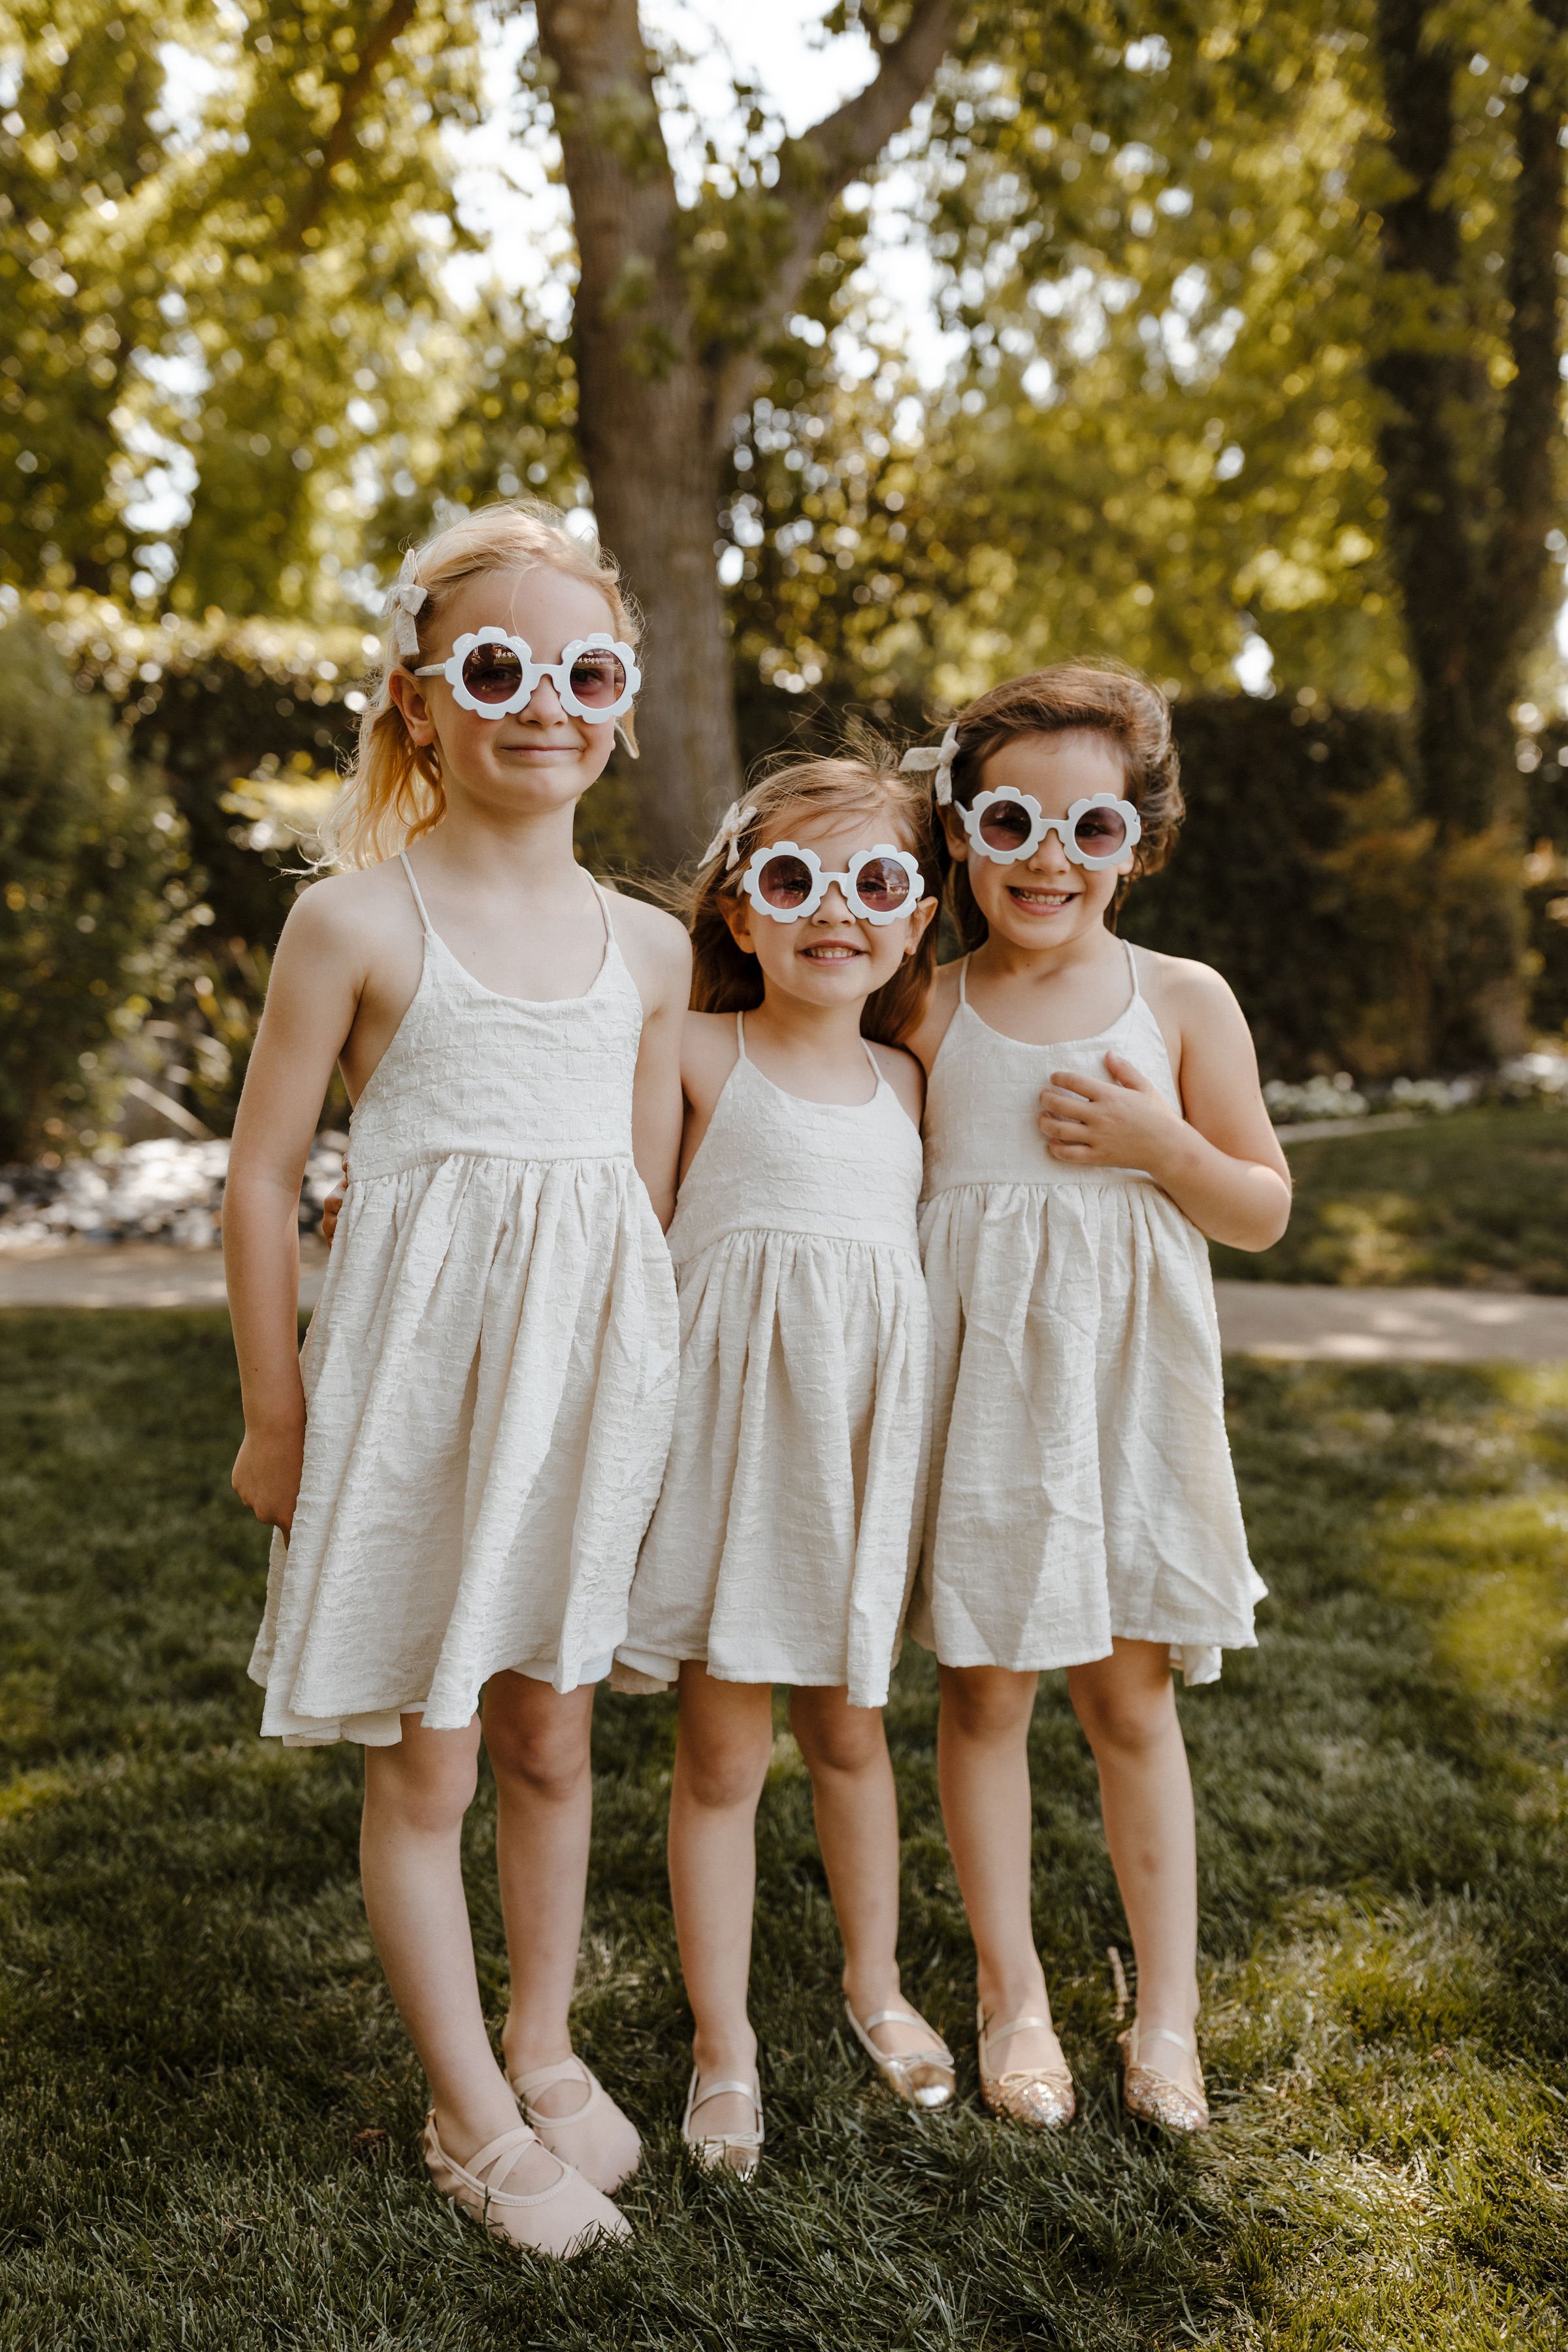 kids at a wedding all wearing daisy shaped sunglasses